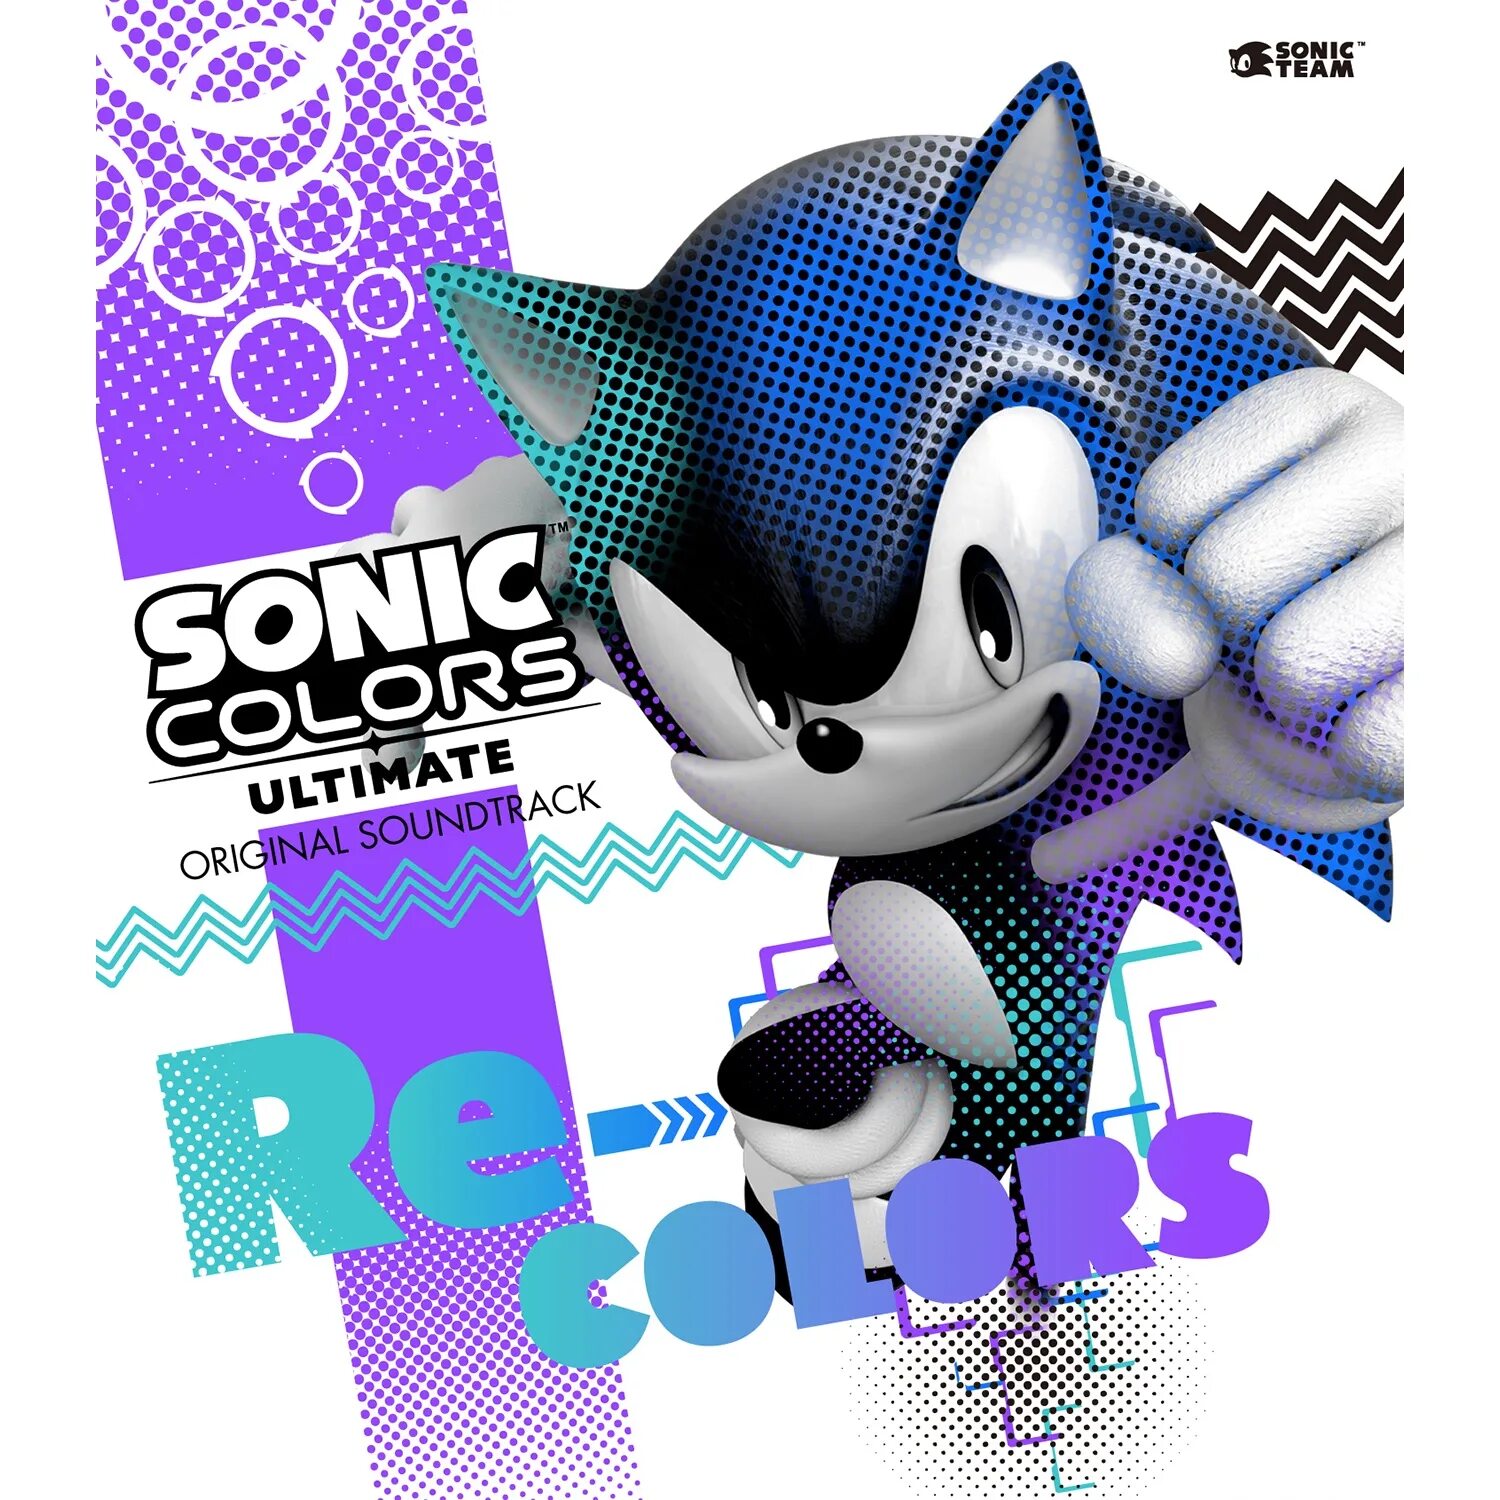 Sonic Colors ВИСП. Соник Колорс ультимейт. Соник Colours. Sonic Colors Original. Стим соник